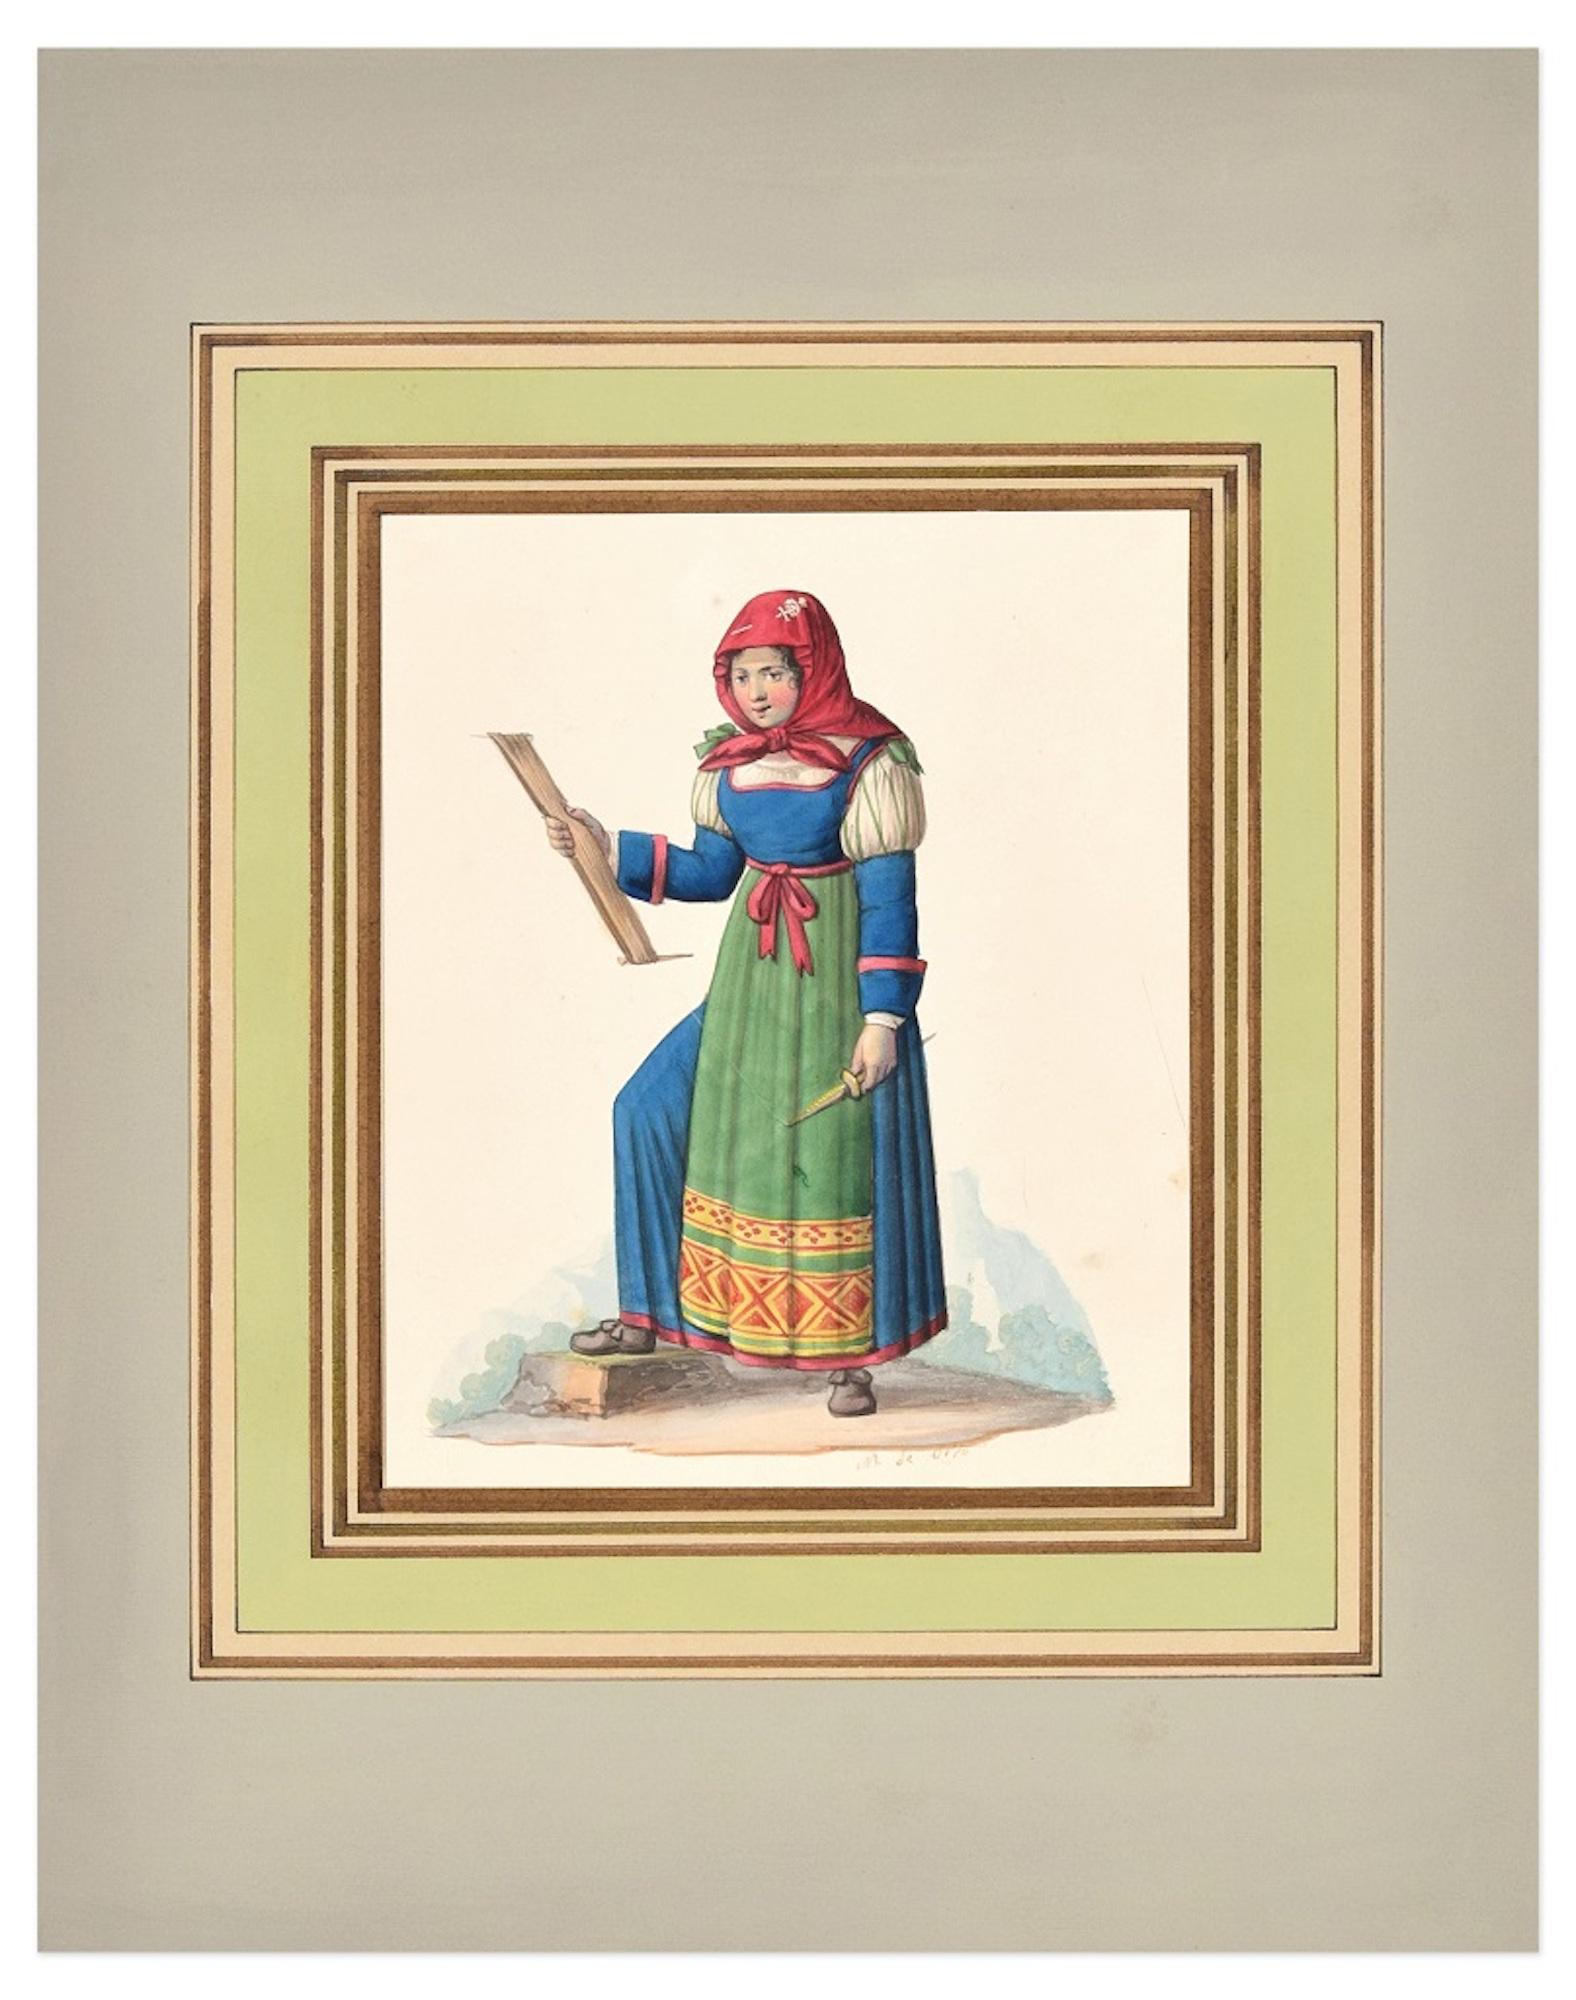 Woman in Costume  - Ink and Watercolor by M. De Vito - Early 1800 - Art by Michela De Vito